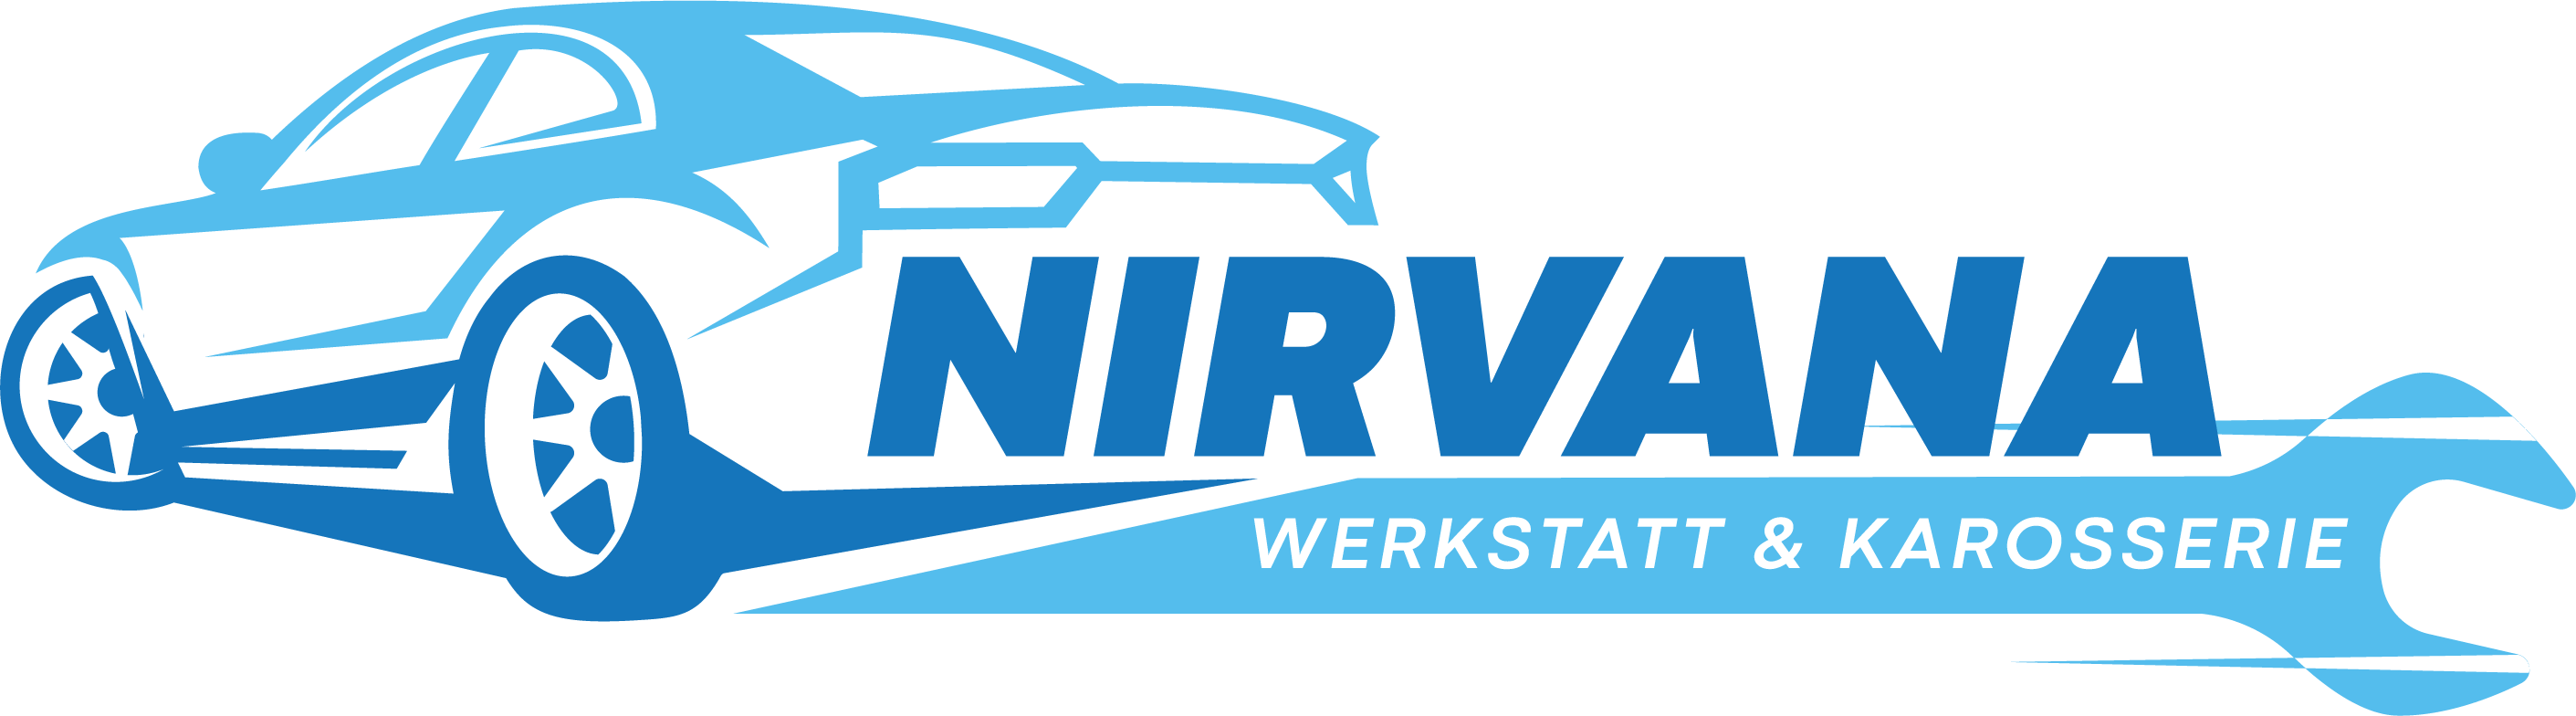 cropped Nirvana Logo